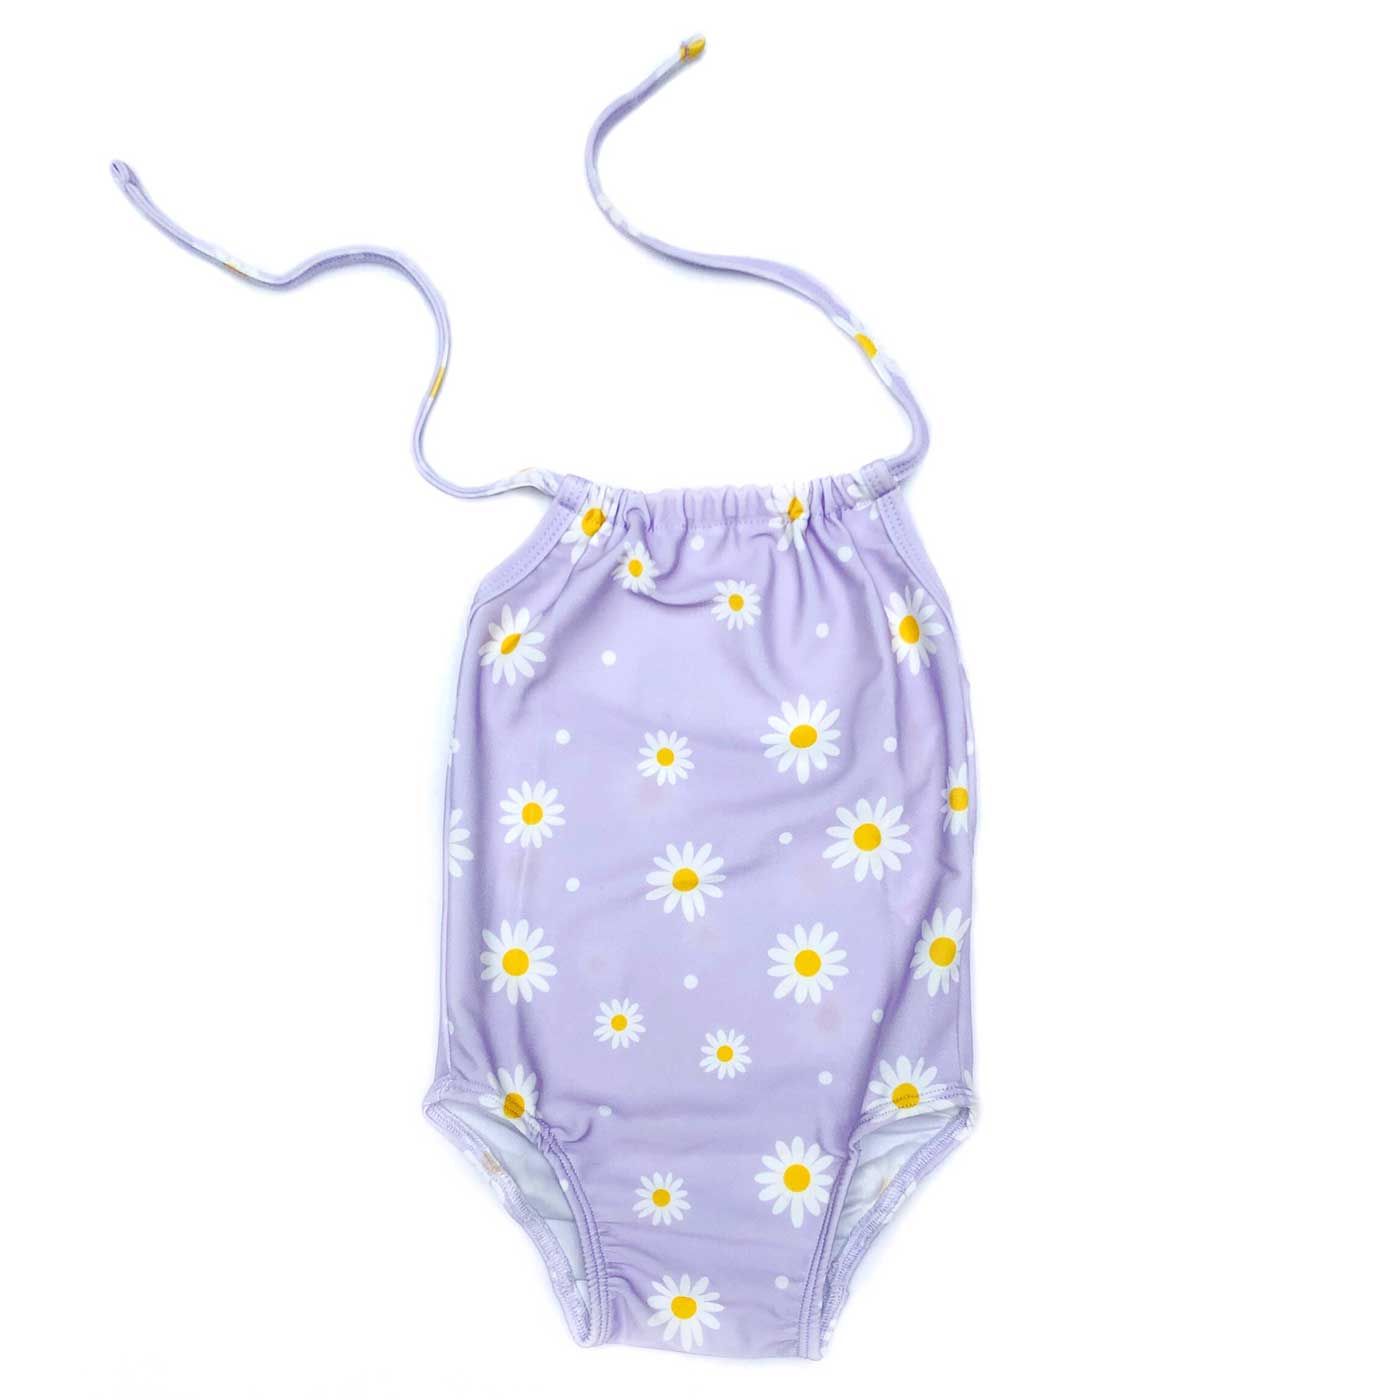 Little Whimsea Daisy Swimsuit in Lilac - M - 1